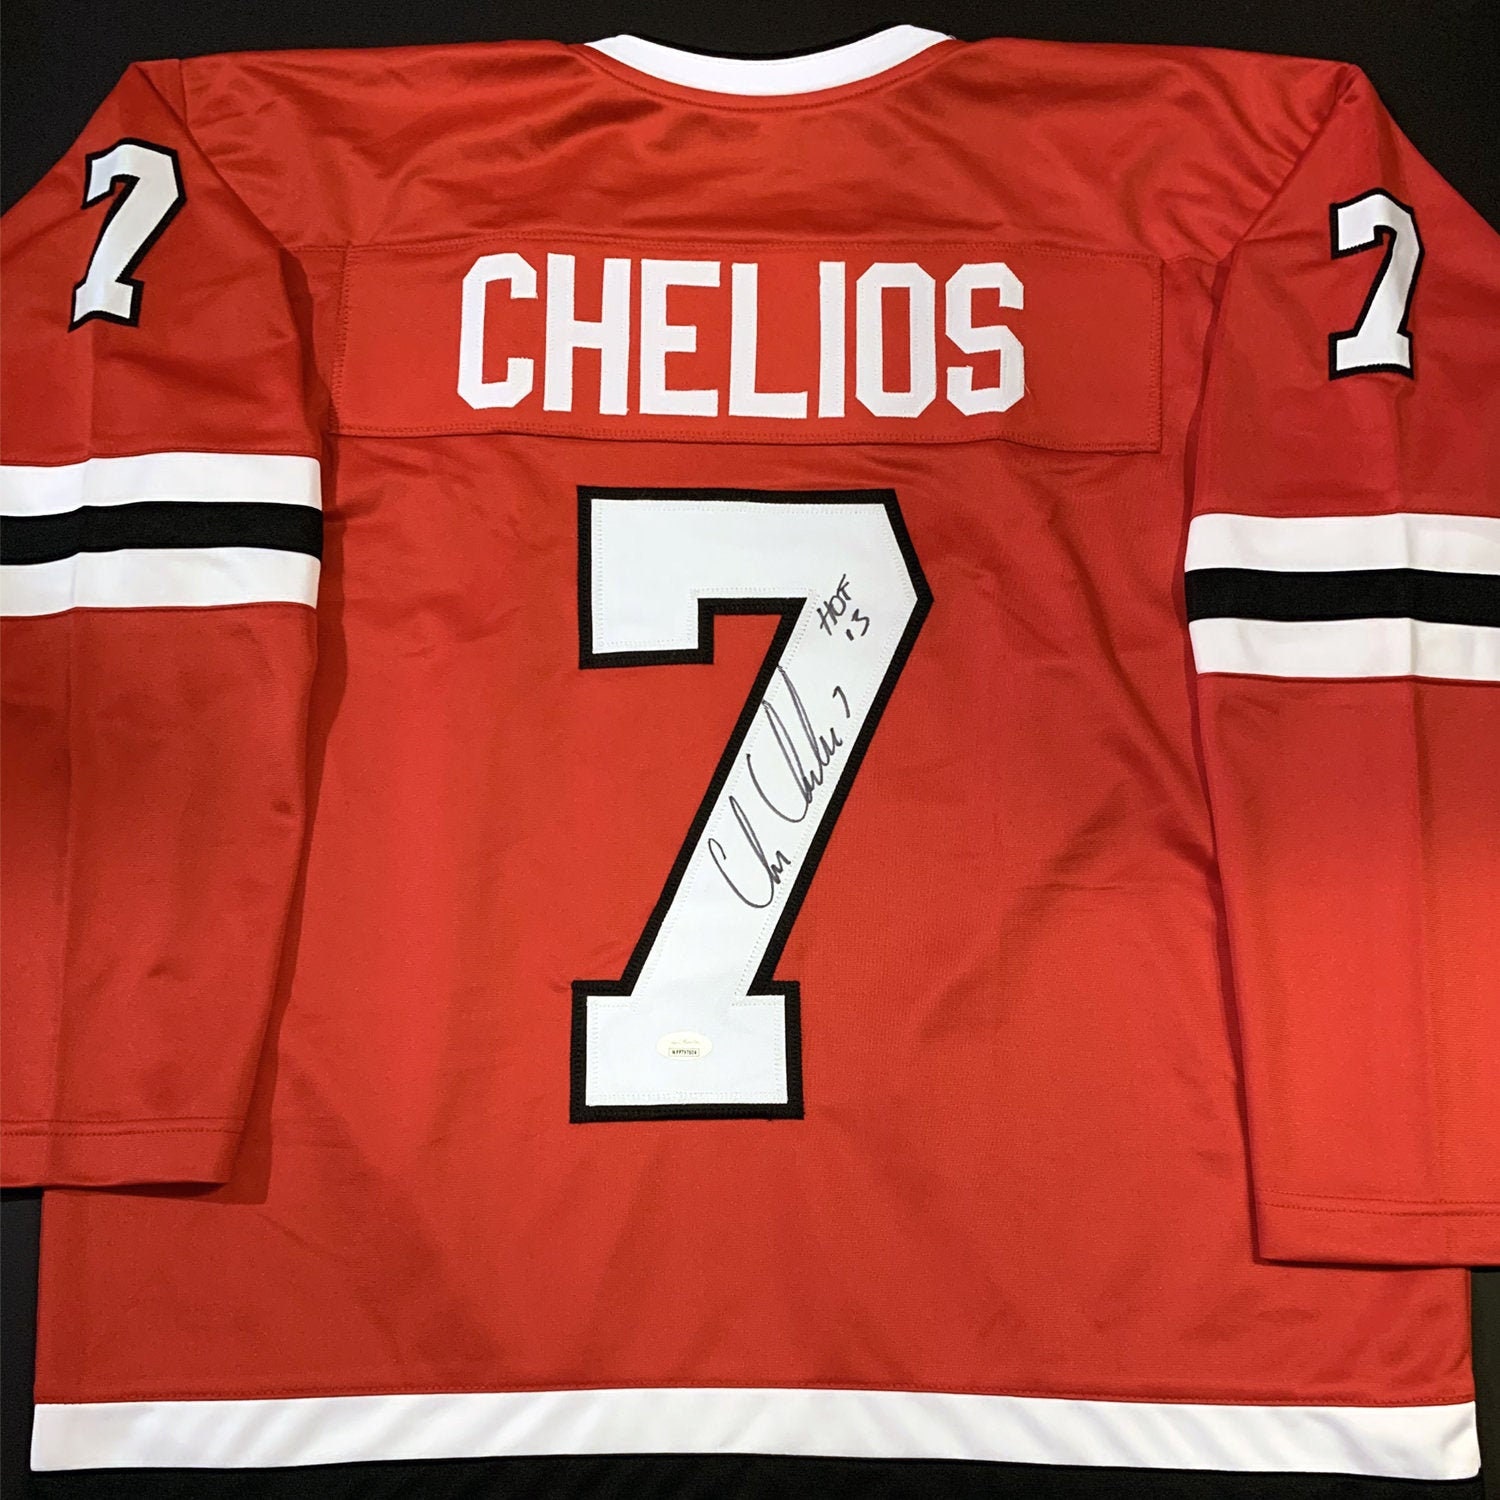 Chris Chelios Signed Chicago Blackhawks Jersey Inscribed HOF 13